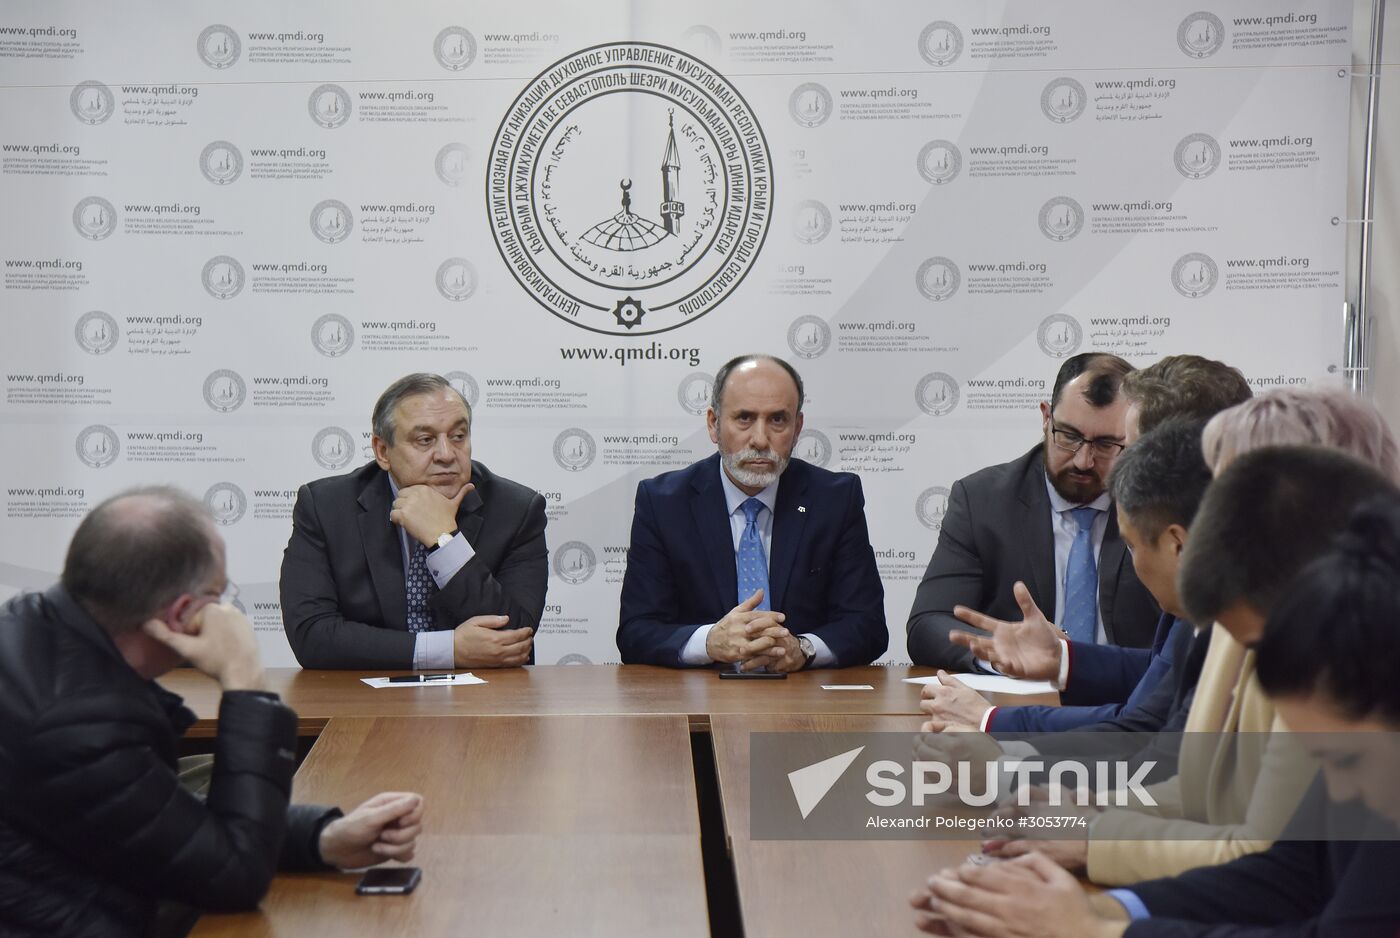 Delegation of European, Uktrainian politicians arrive in Crimea